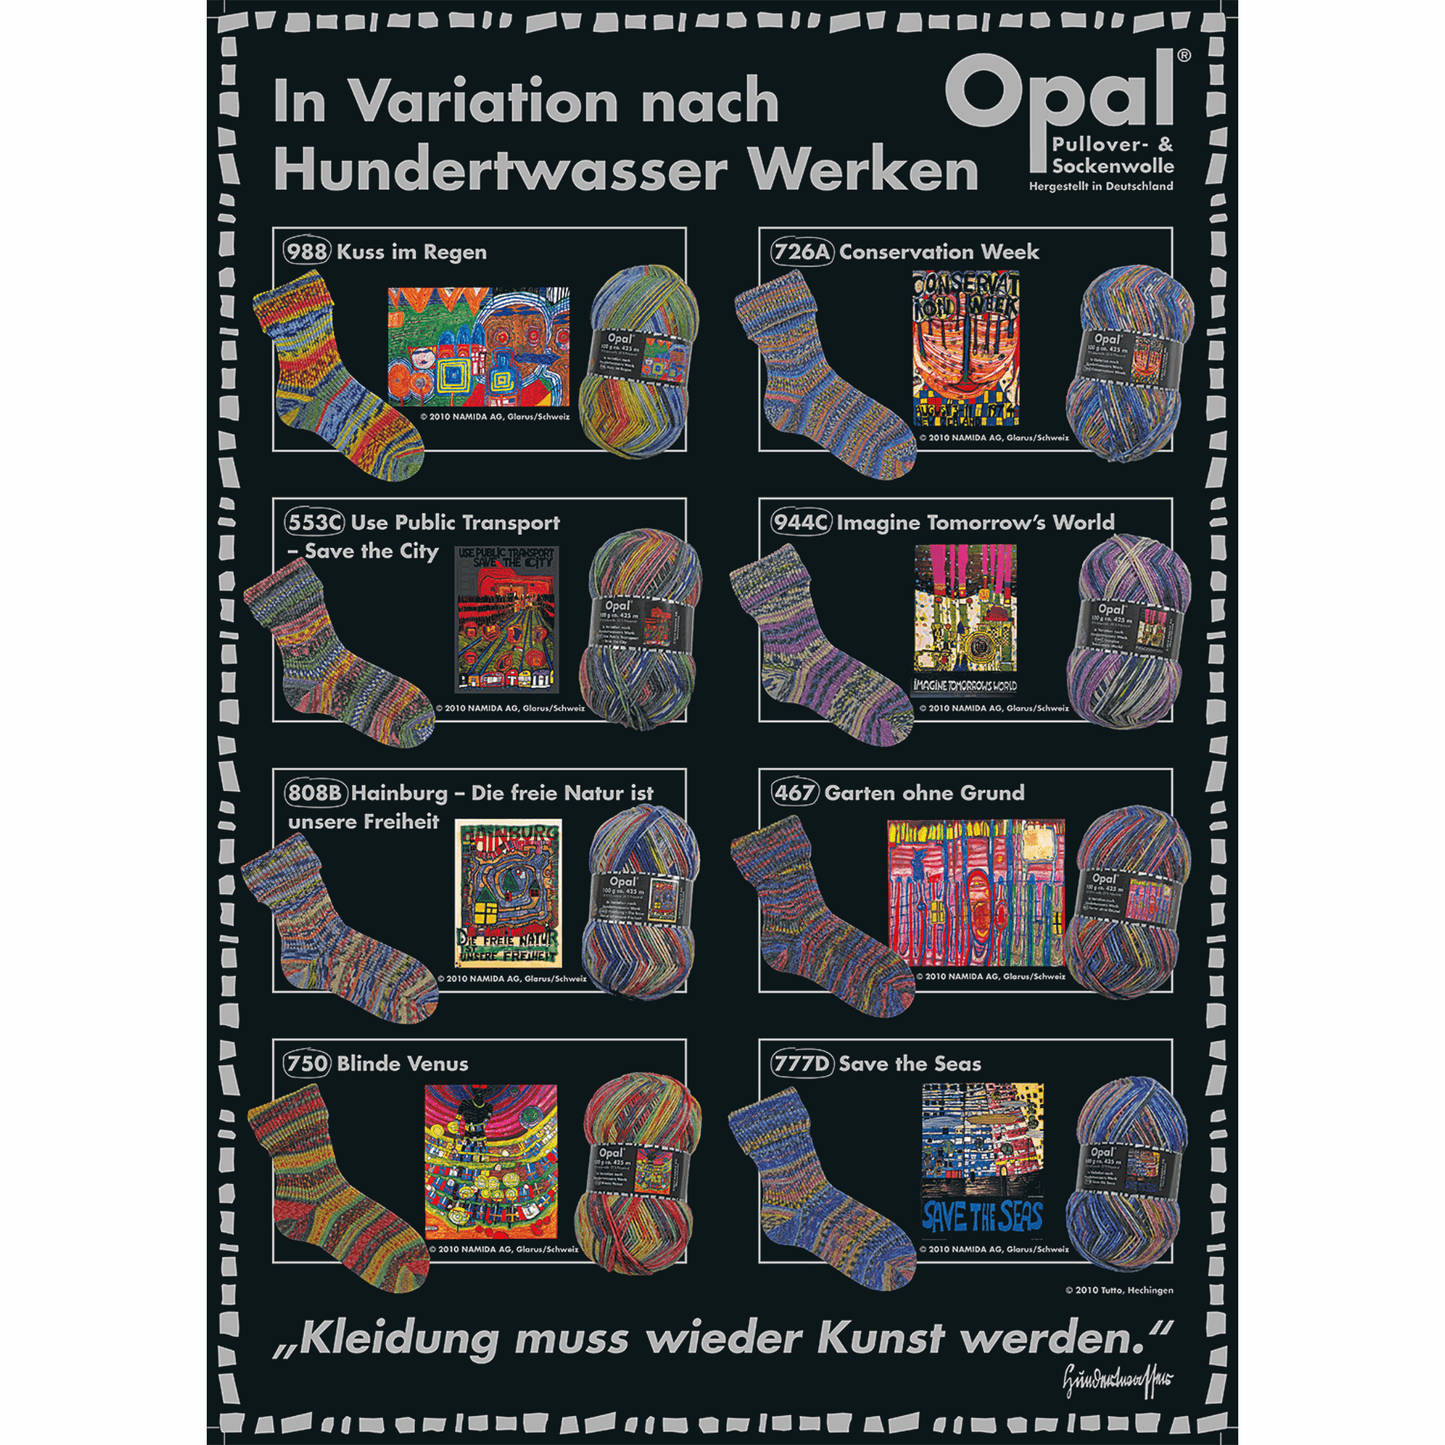 Opal Hundertwasser III 100 G, 97740, Farbe imagine tomo 3203